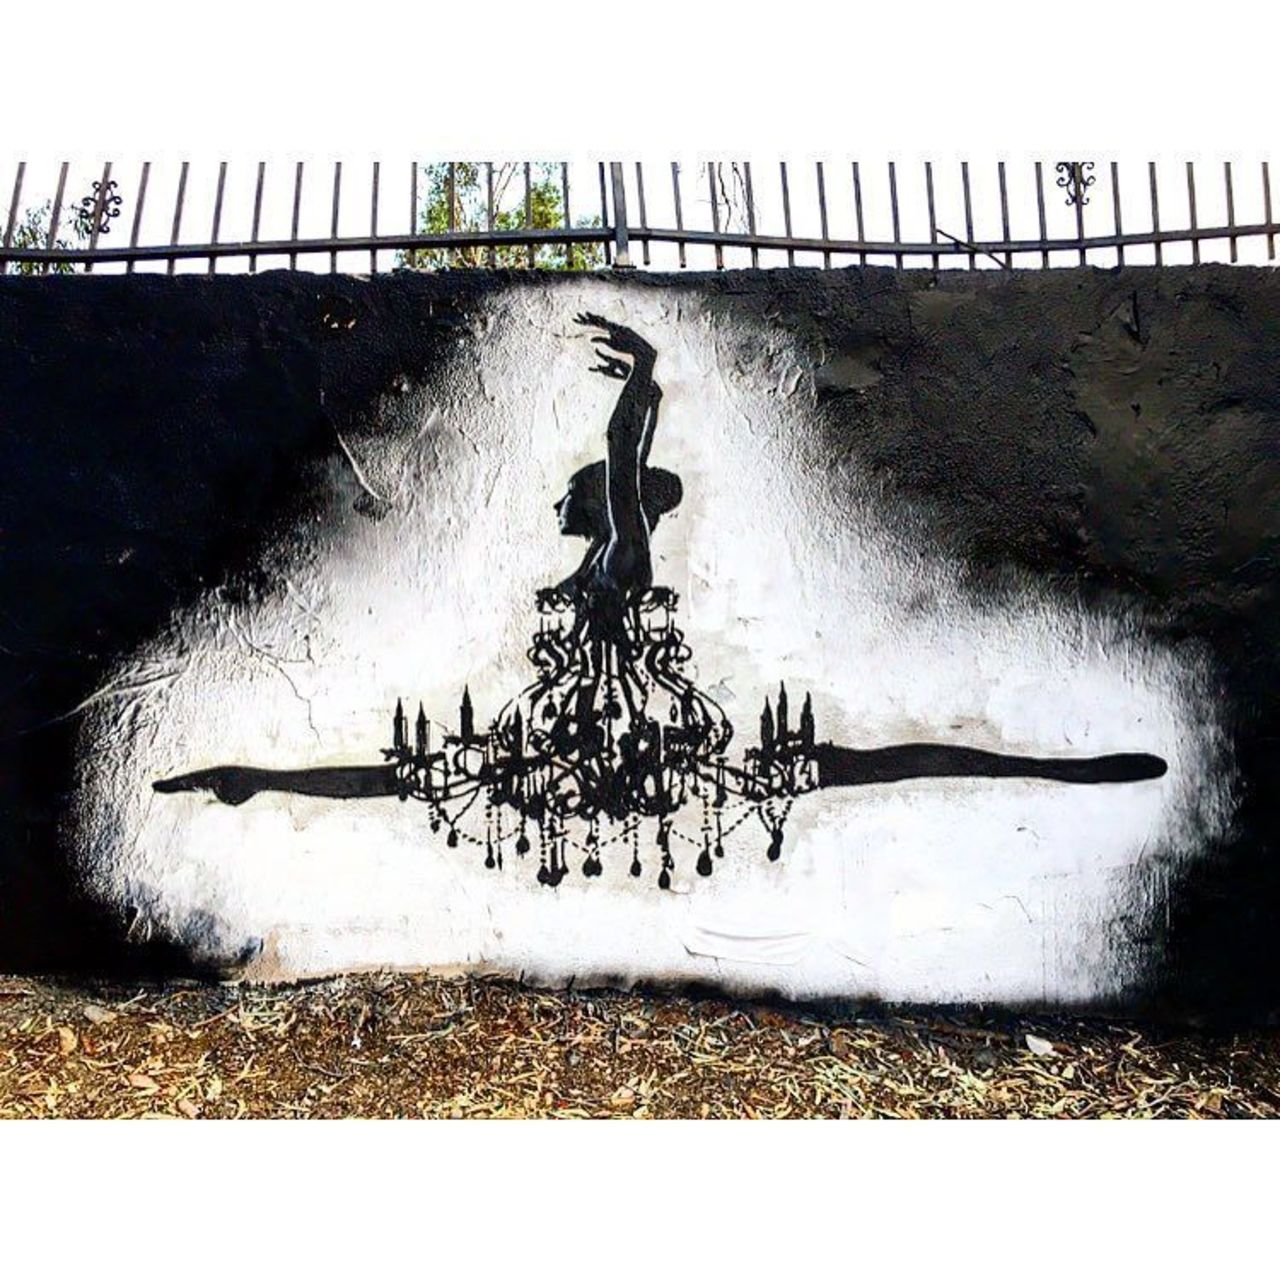 "Fly high and shine your inner beauty" . #runyoncanyon #LA #punkmetender #streetart #streetartla #graffiti #gra… https://t.co/gpQoDeq51U